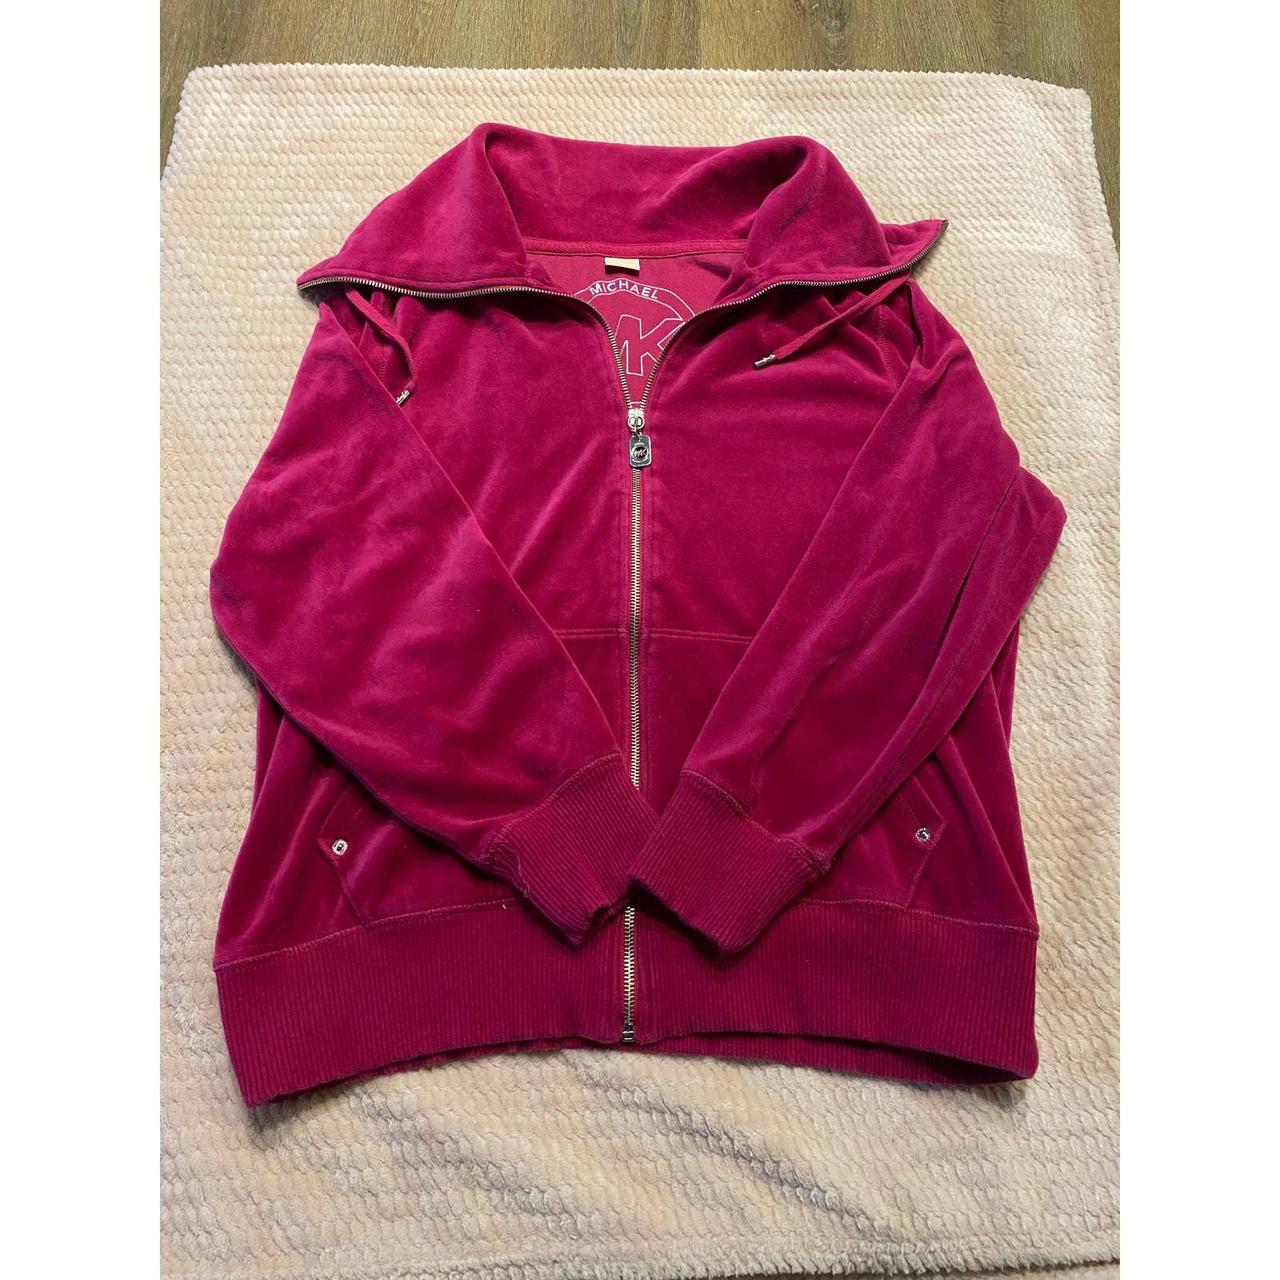 Michael Kors Women's Pink Jacket | Depop